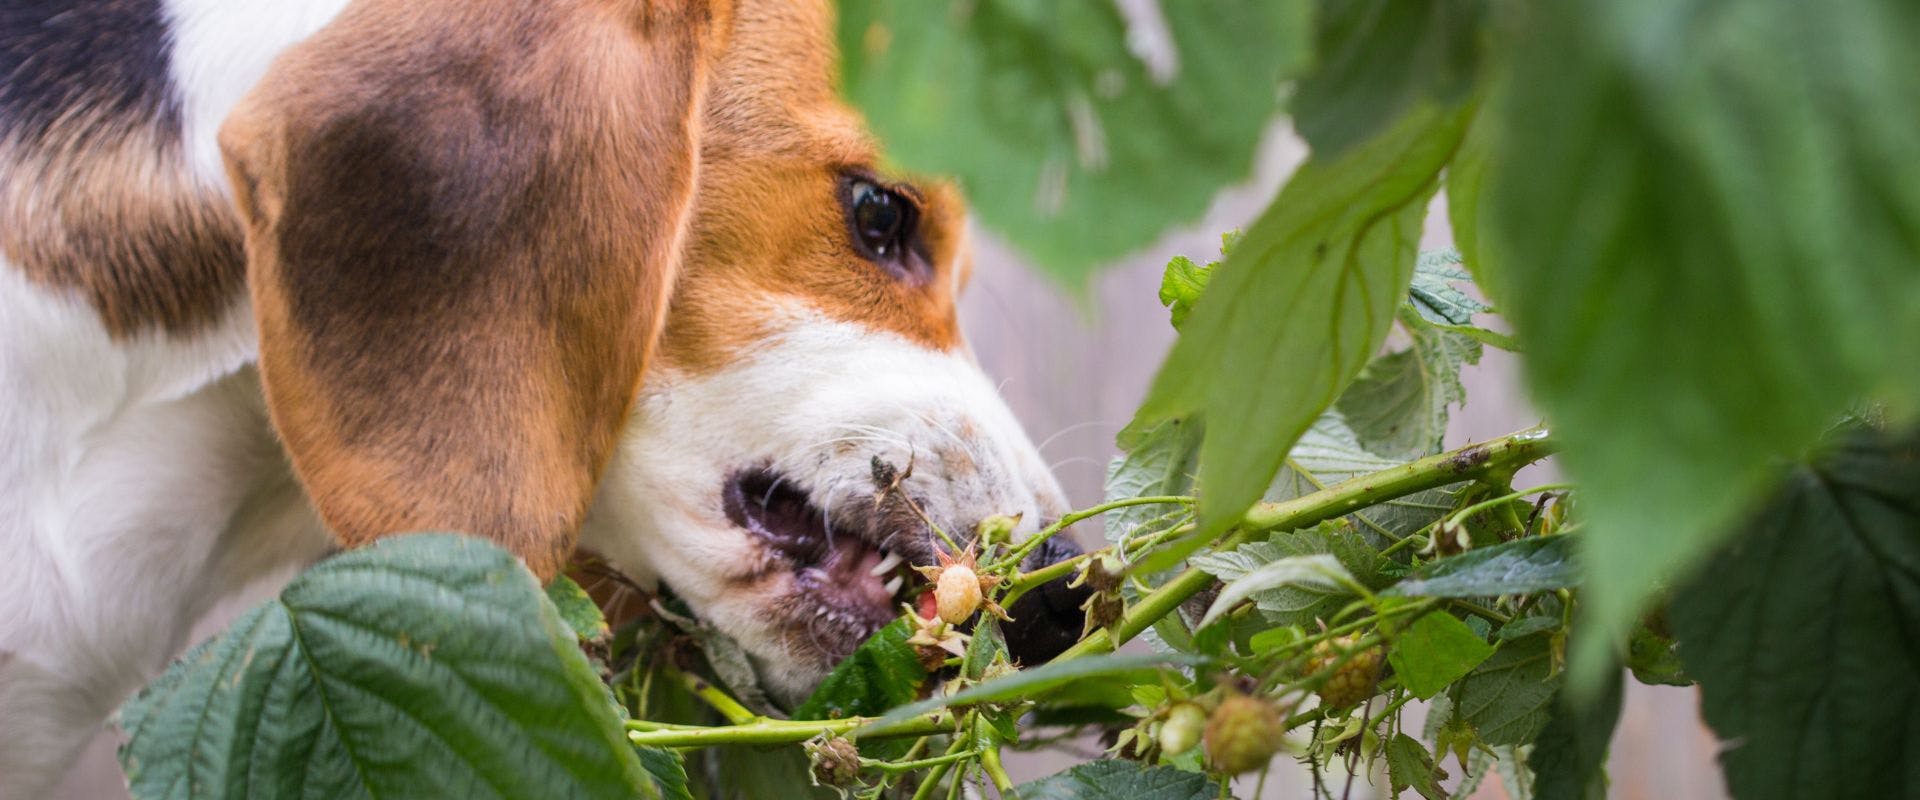 Beagle dog eating raspberries from bush